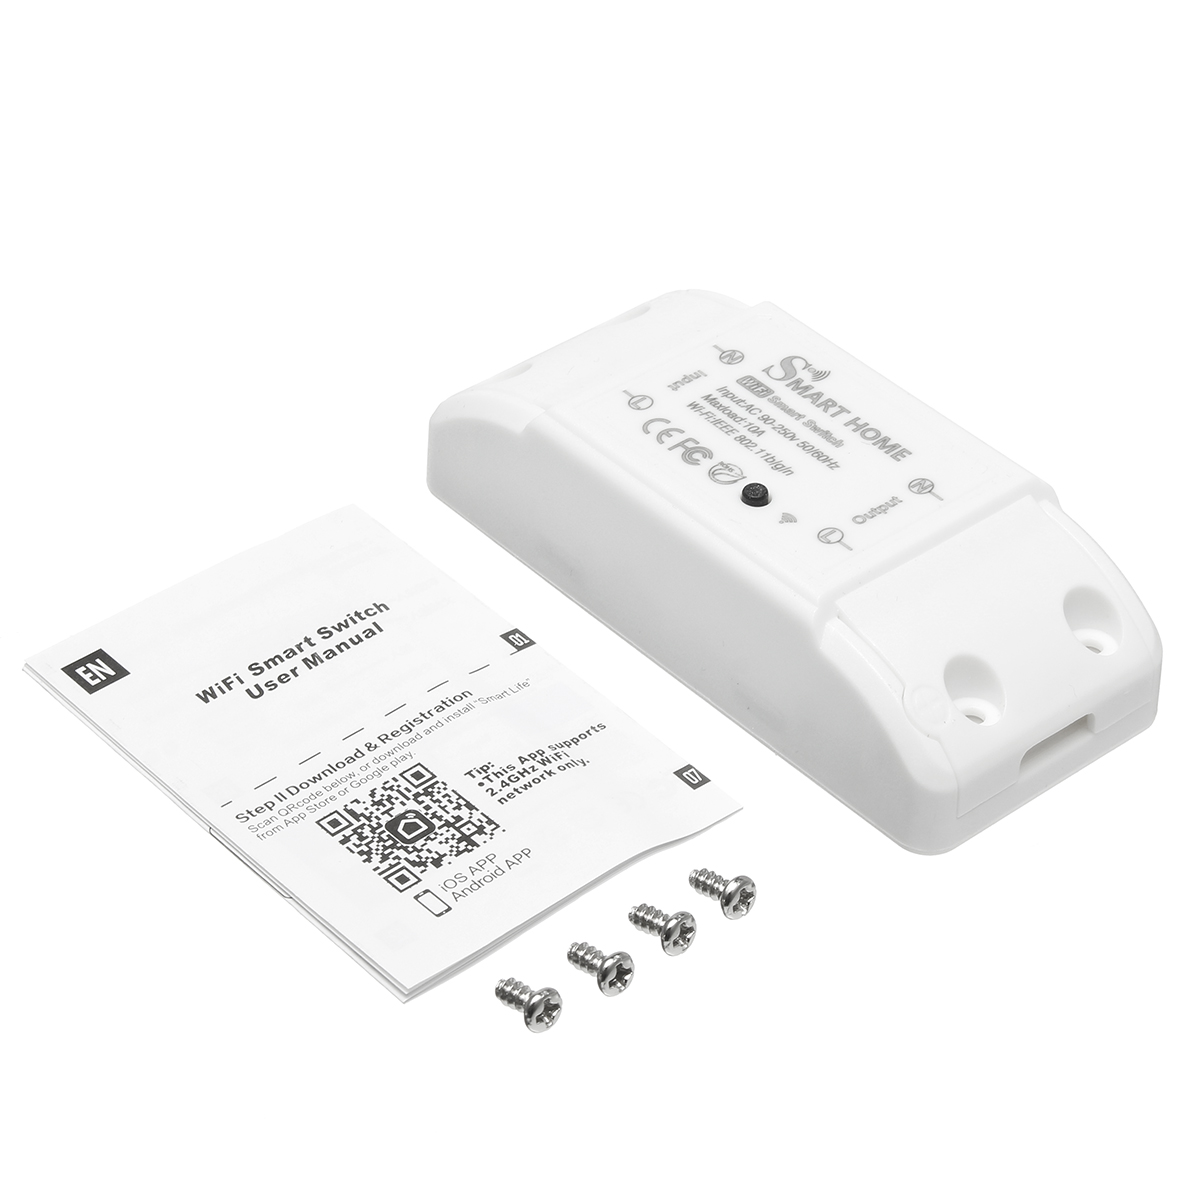 

WiFi Smart Switch 10A/2200W Wireless Remote Switch Timer APP Control Universal Smart Home Automation Module Light Switch